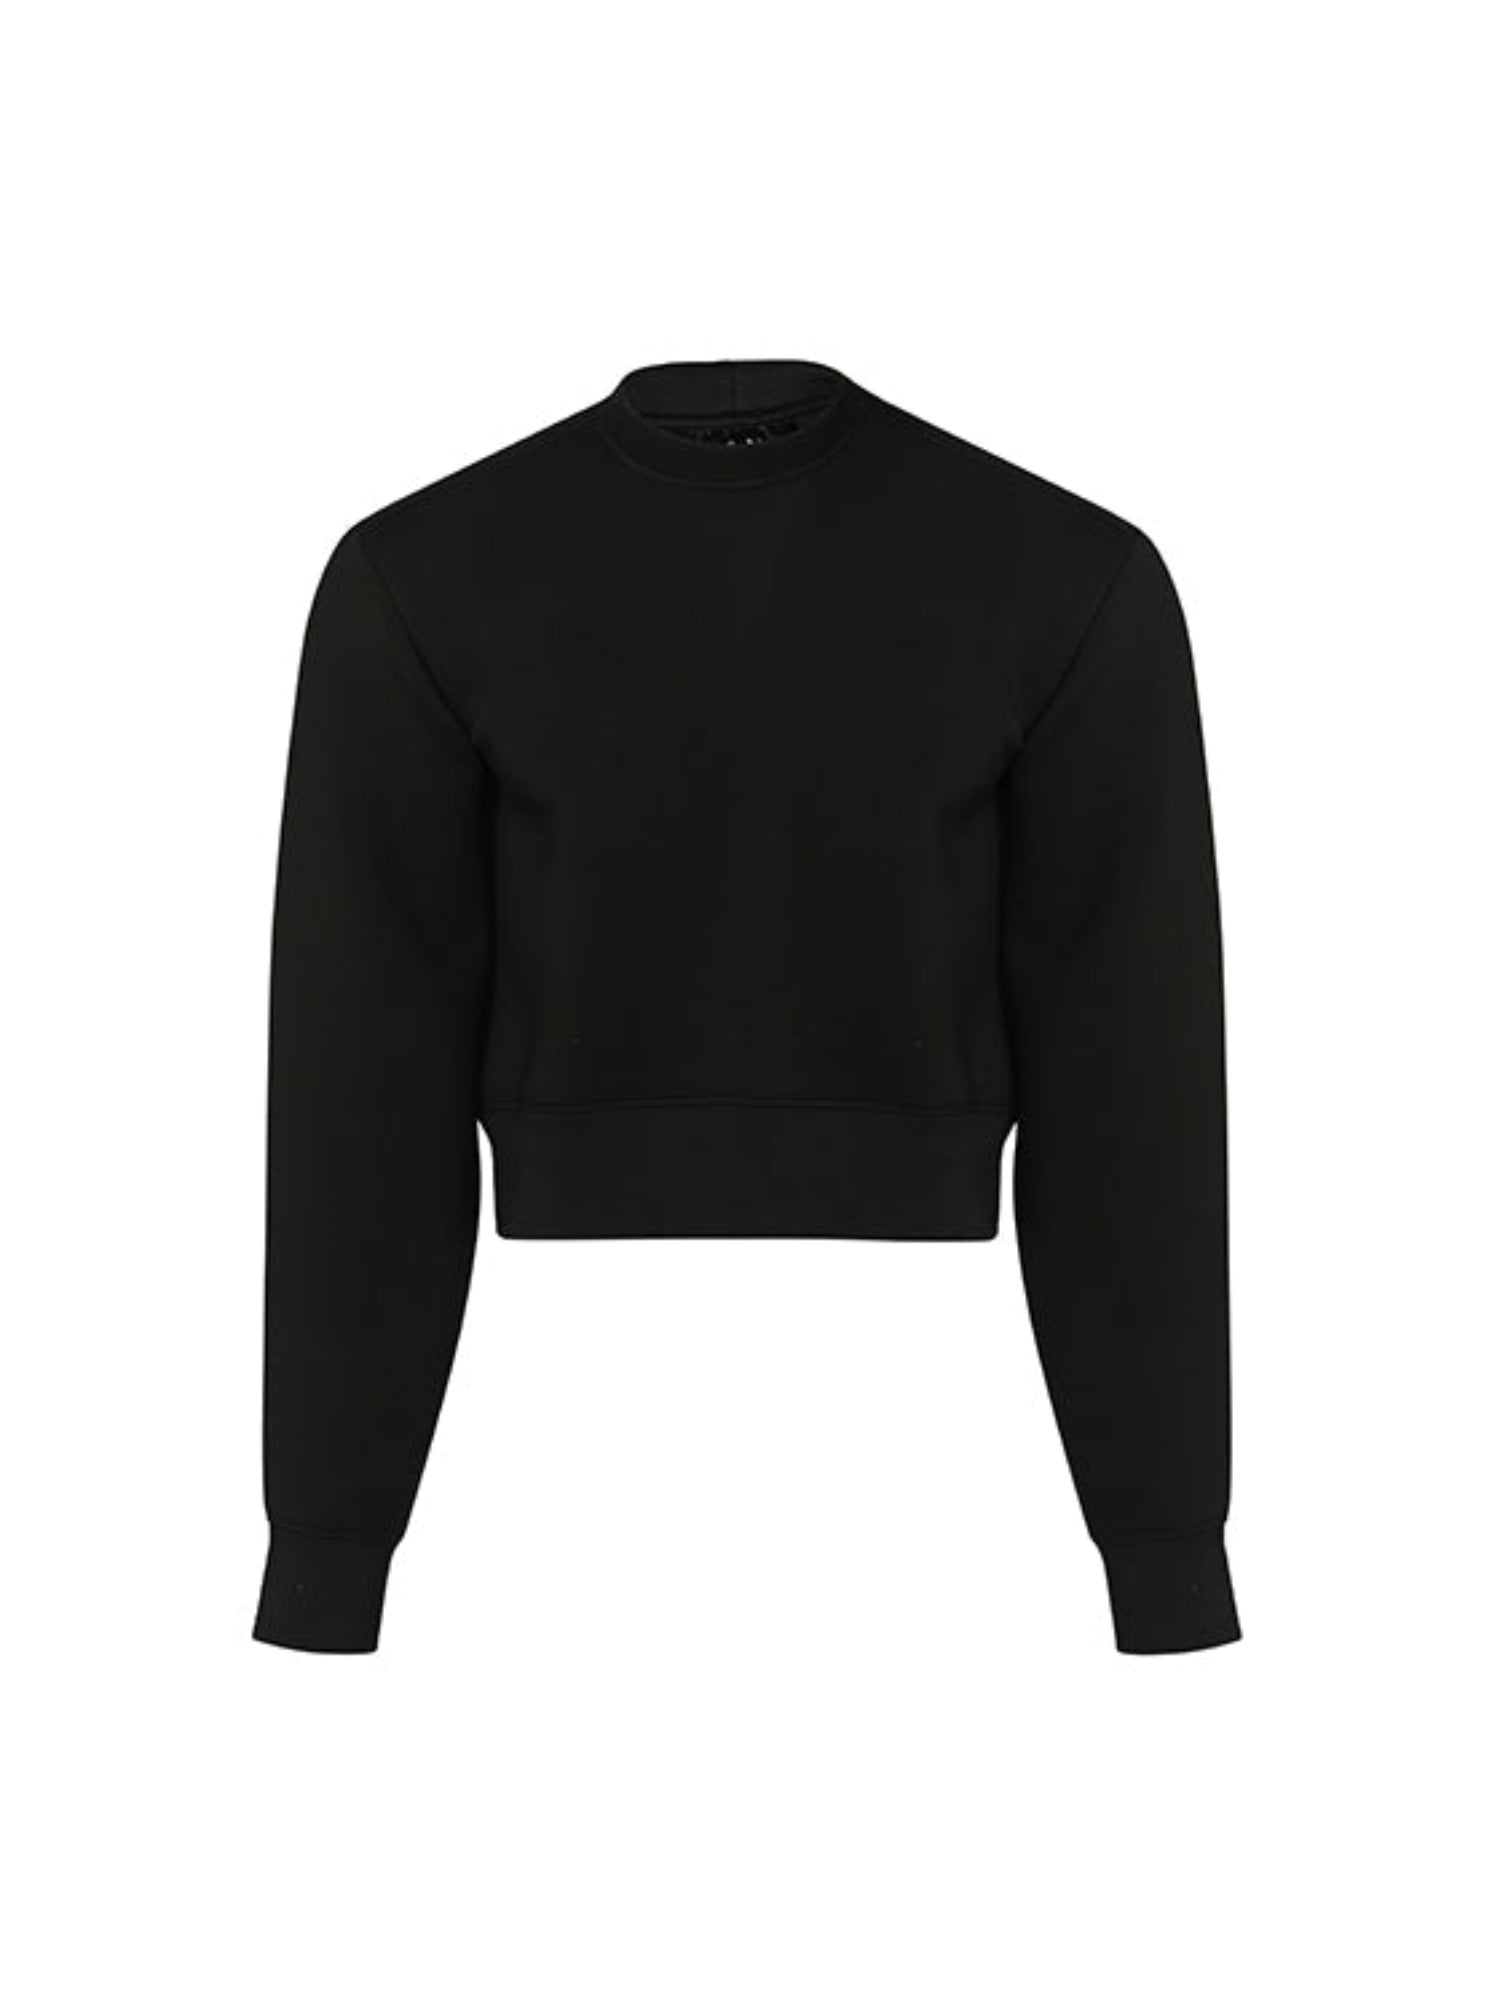 Cropped black econyl sweatshirt